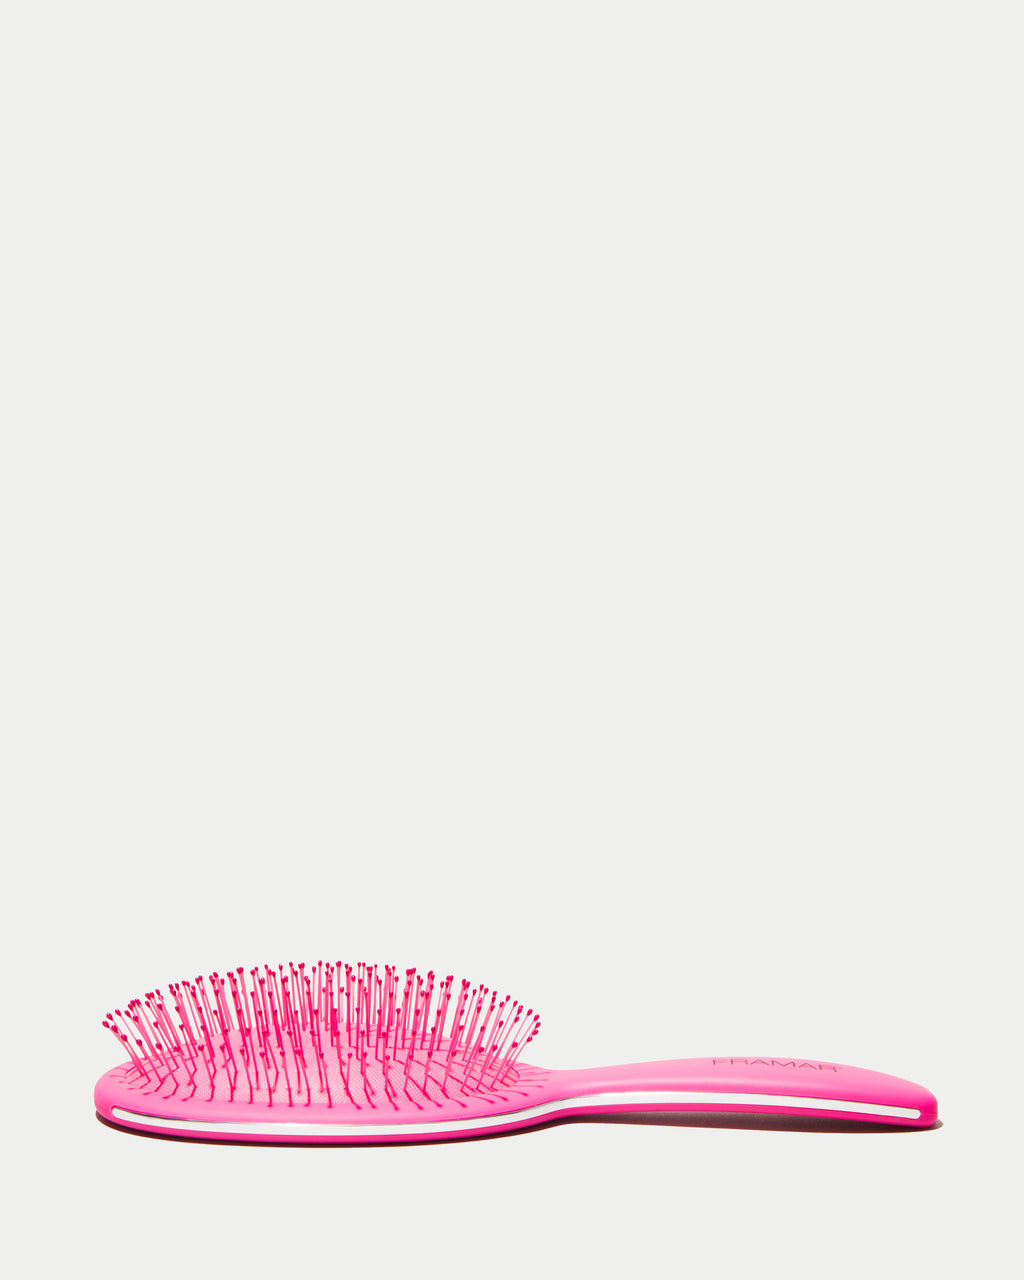 Framar Pinky Swear - Detangle Brush